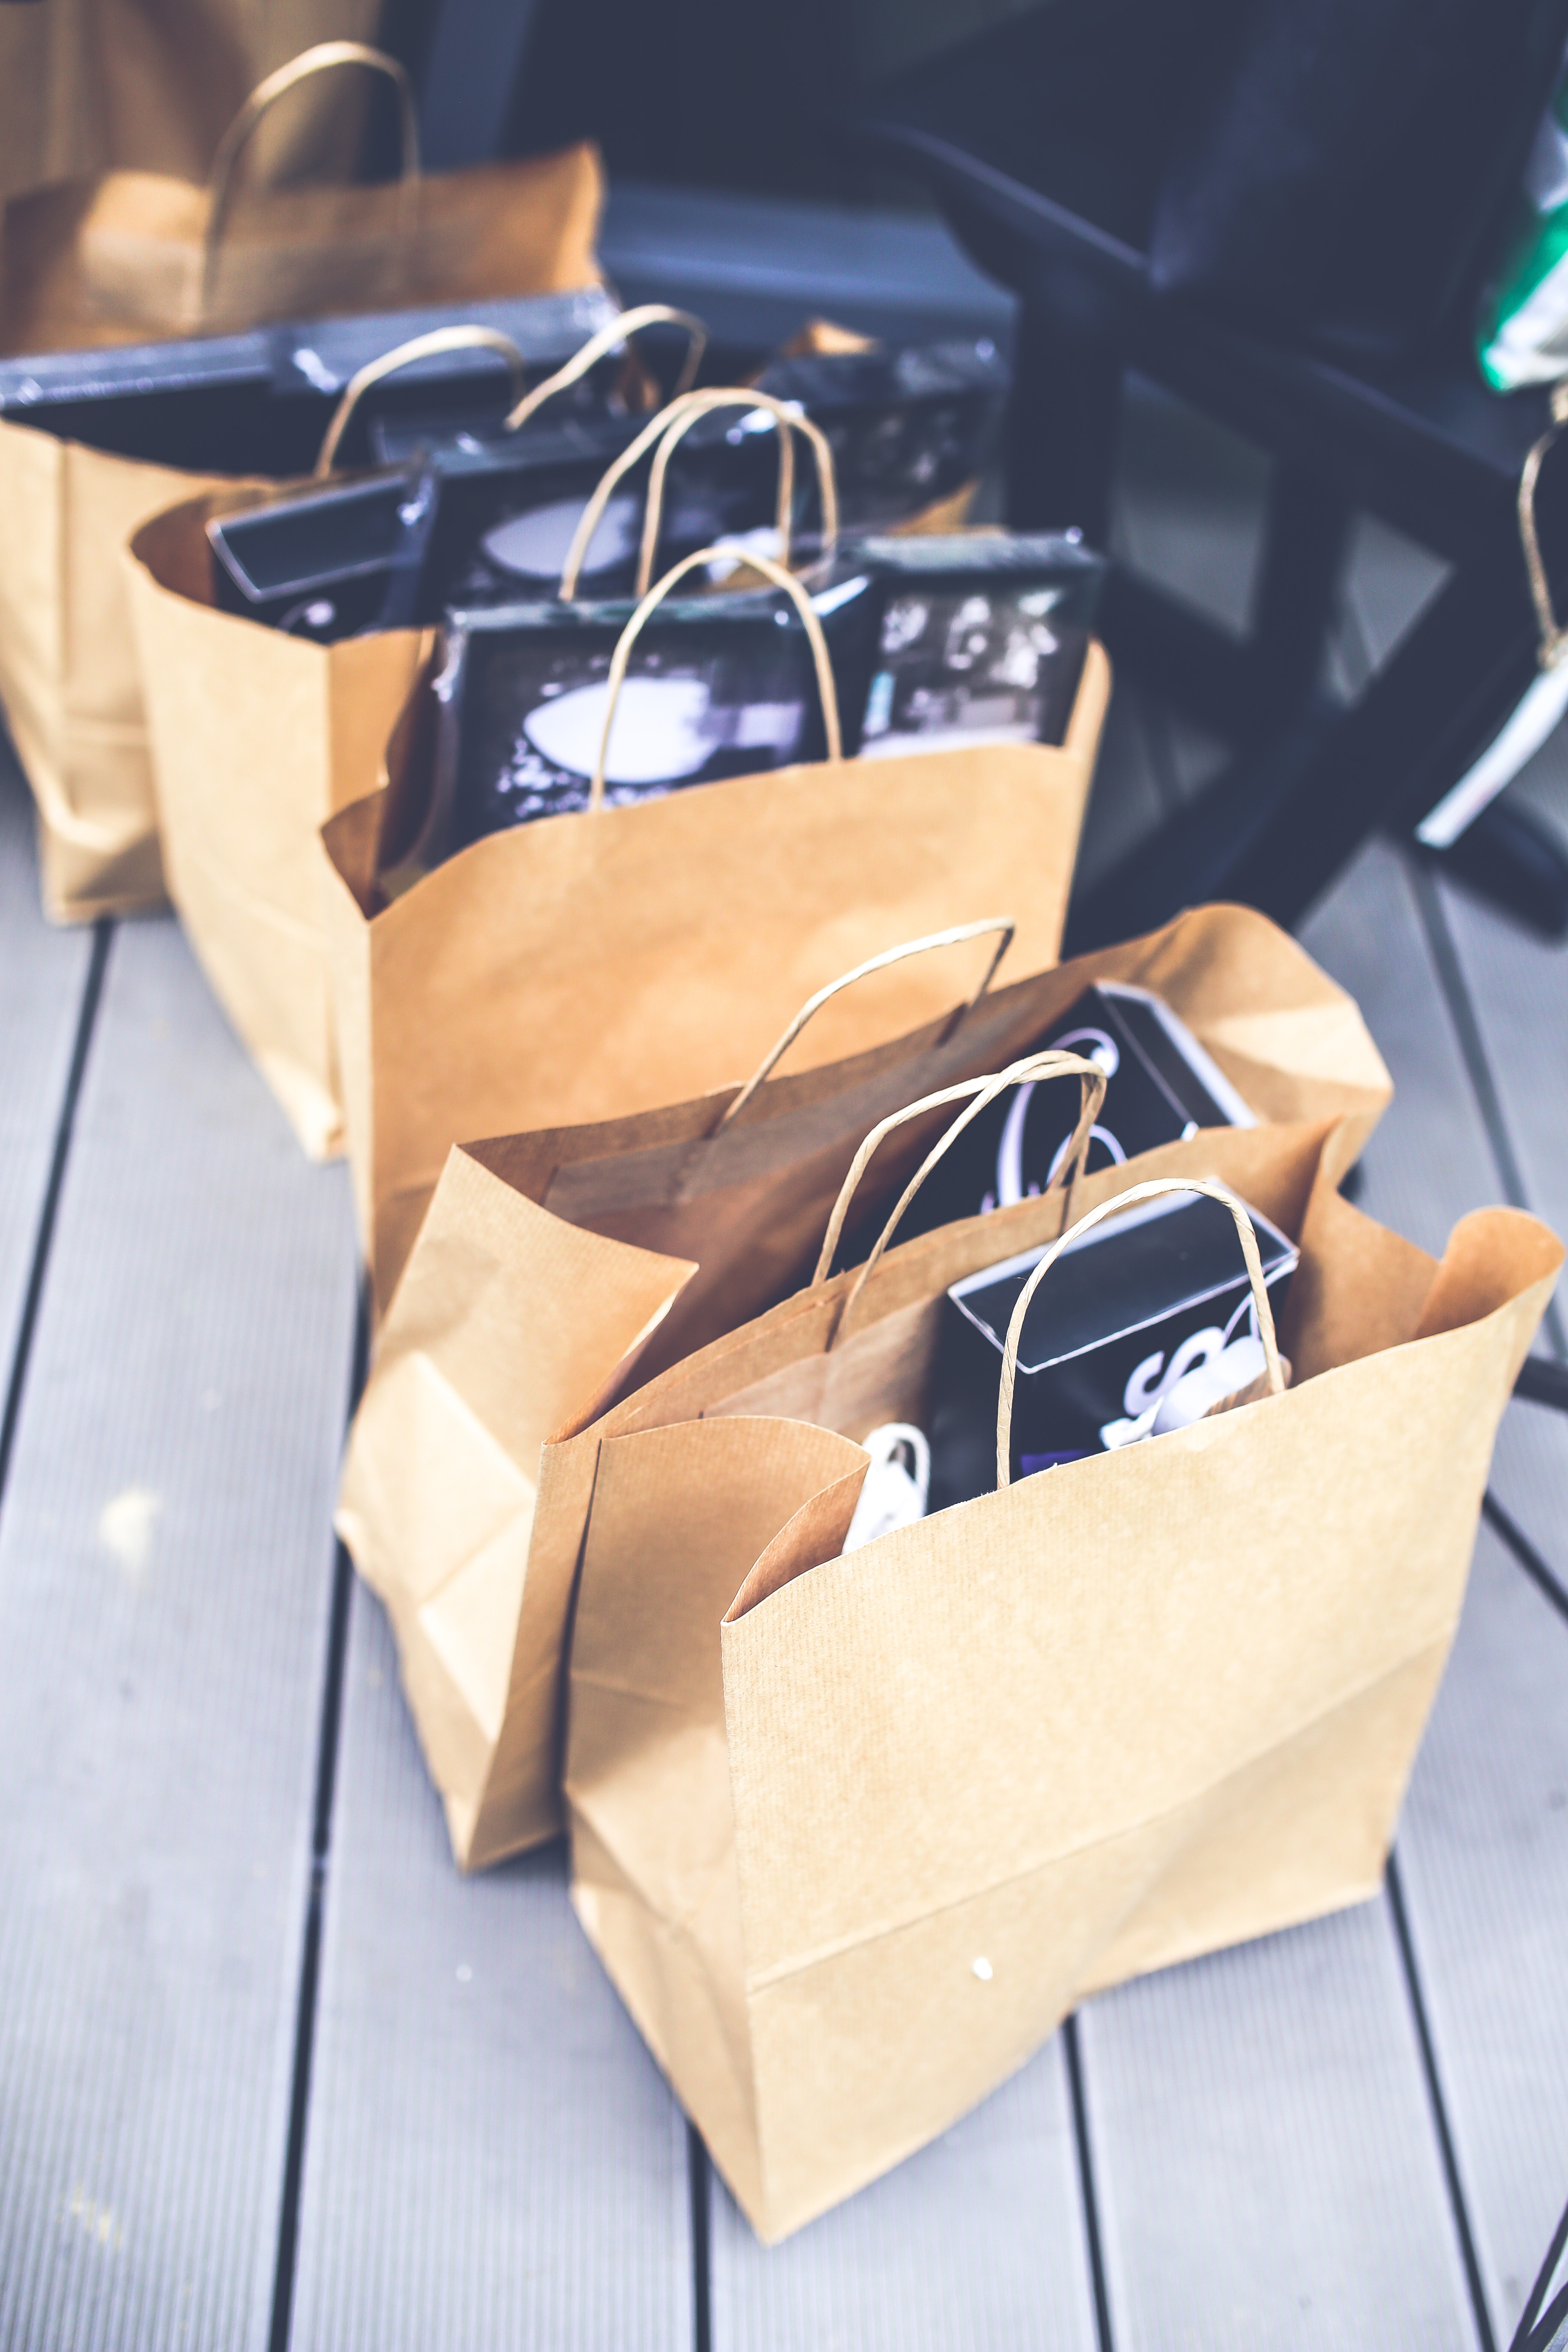 Free photo: Shopping bags, Stock, Shopping